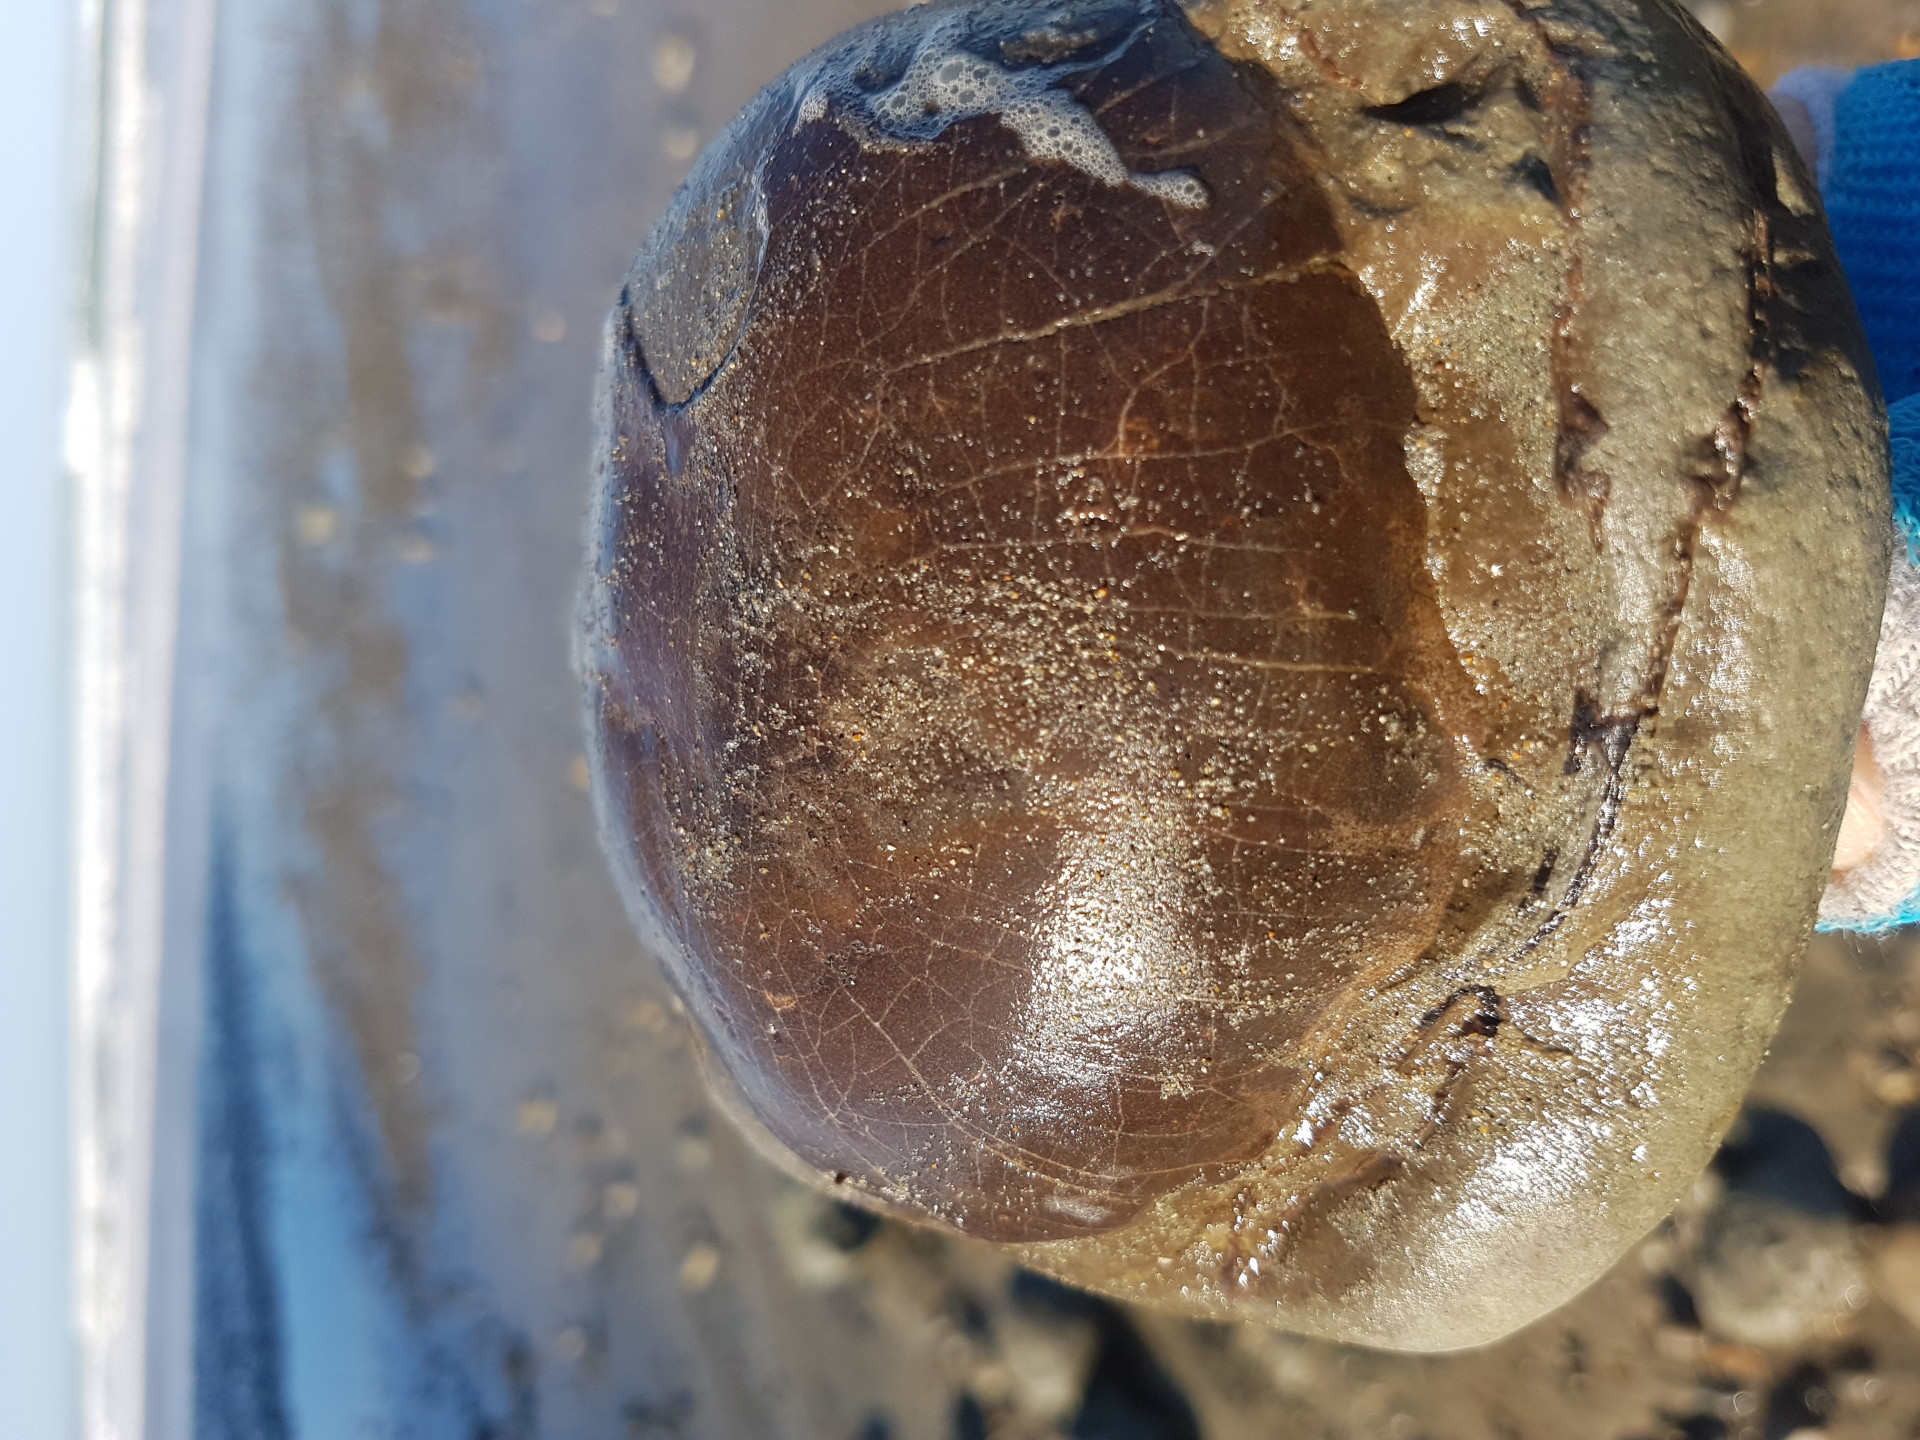 Tumidocarcinus medium with exposed shell